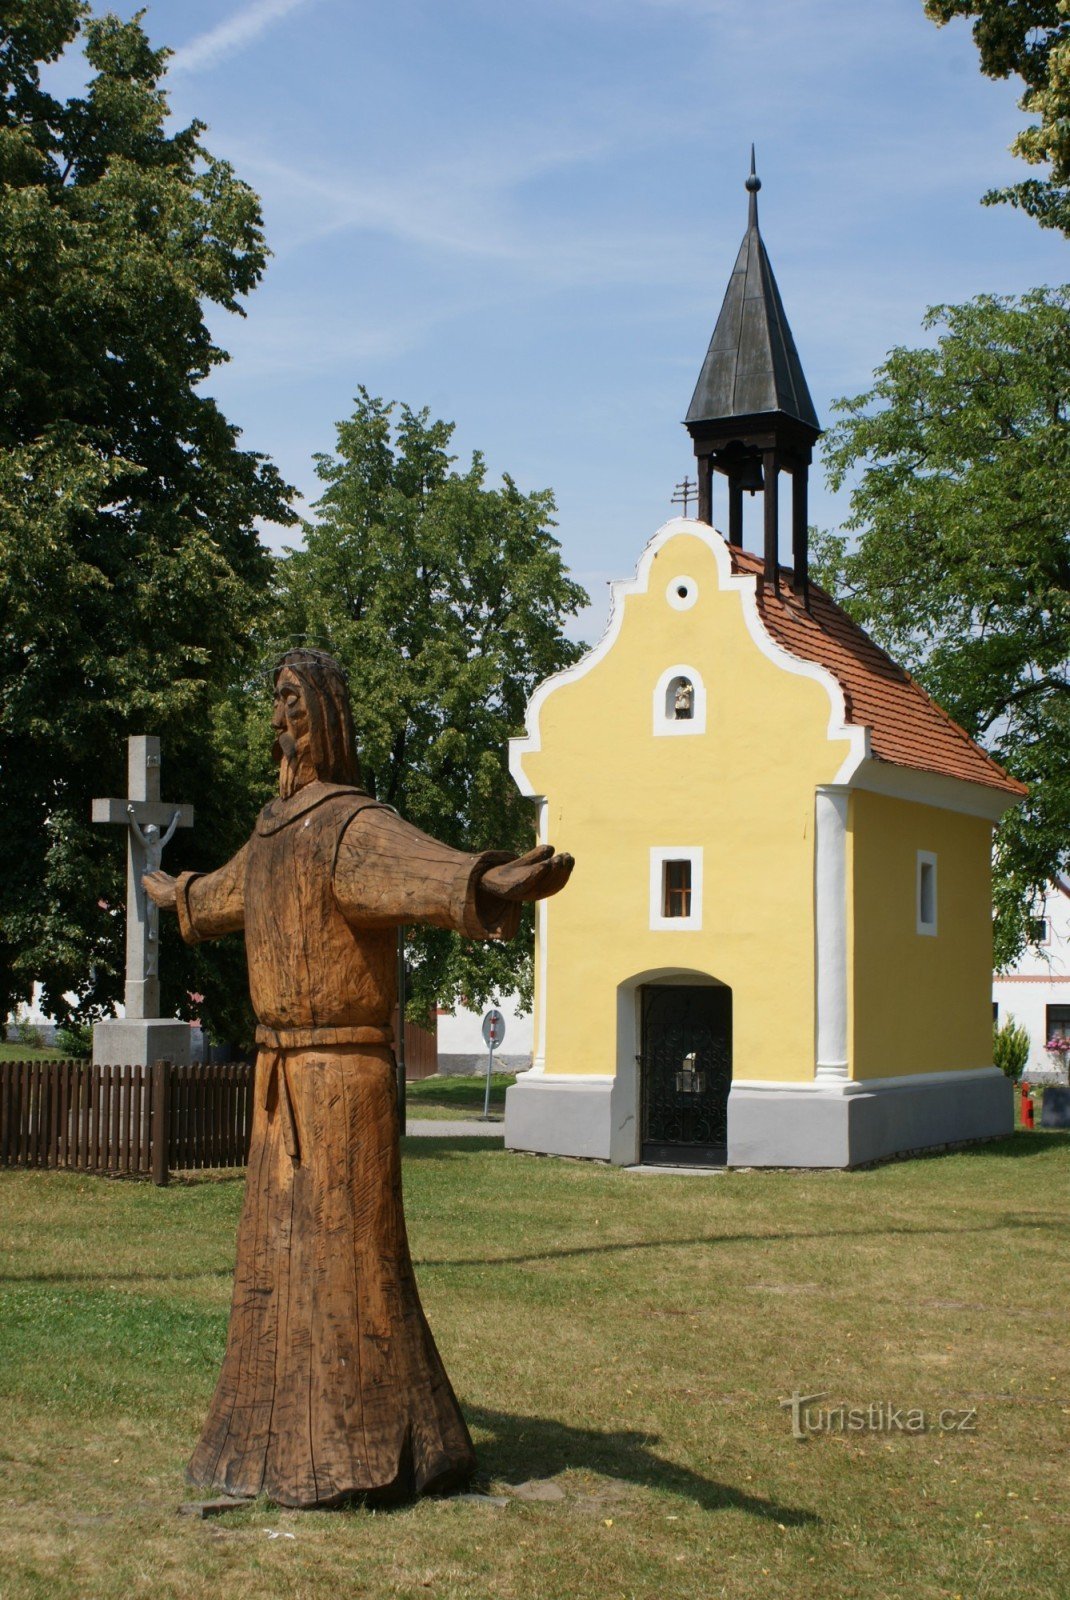 Village chapel